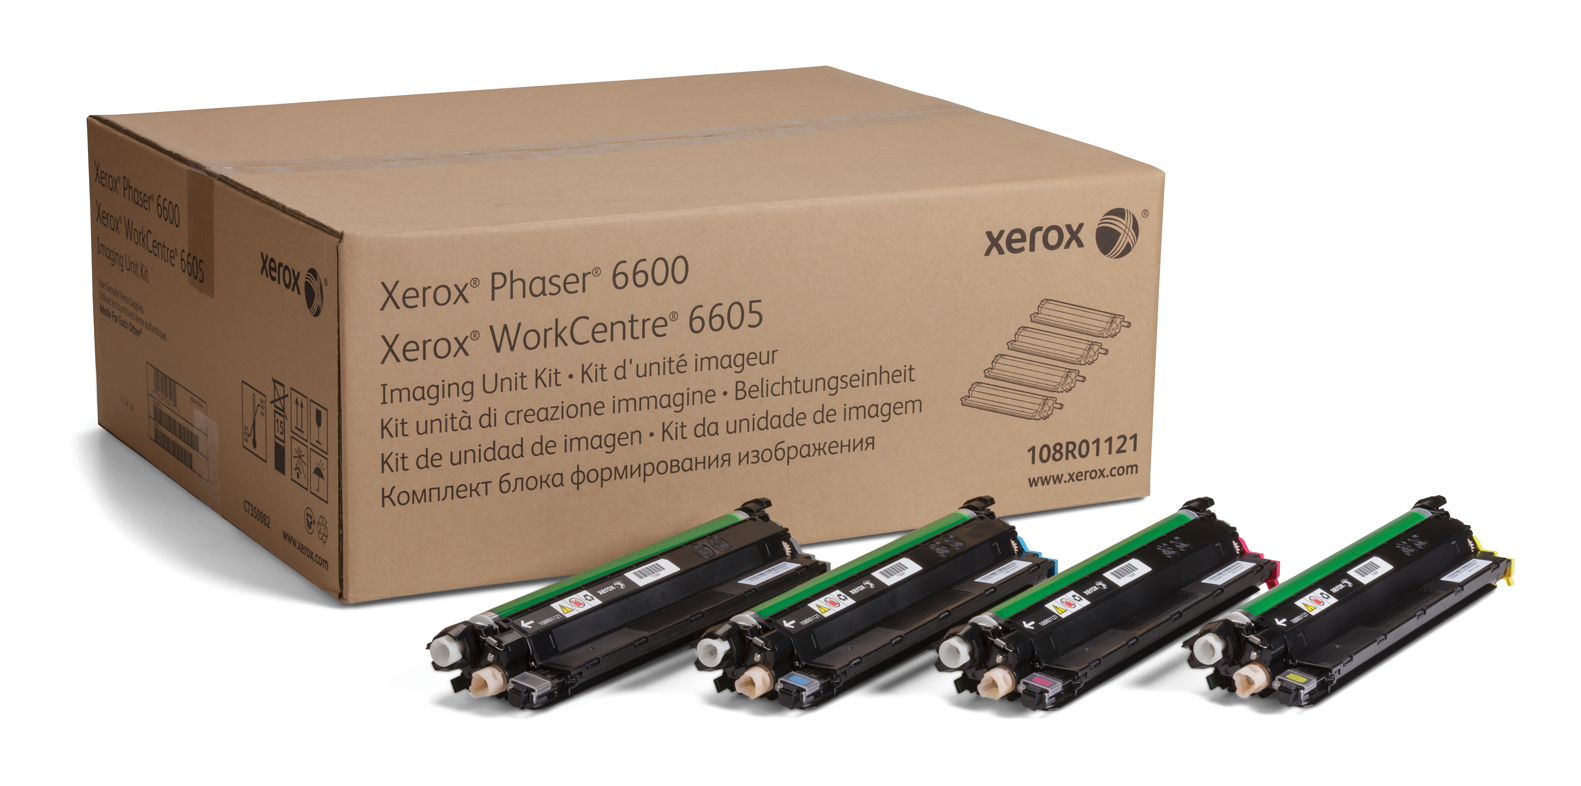 Xerox 108R01121 Drum kit multi pack Bk,C,M,Y, 4x60K pages Pack=4 for Xerox Phaser 6600/VersaLink C 400